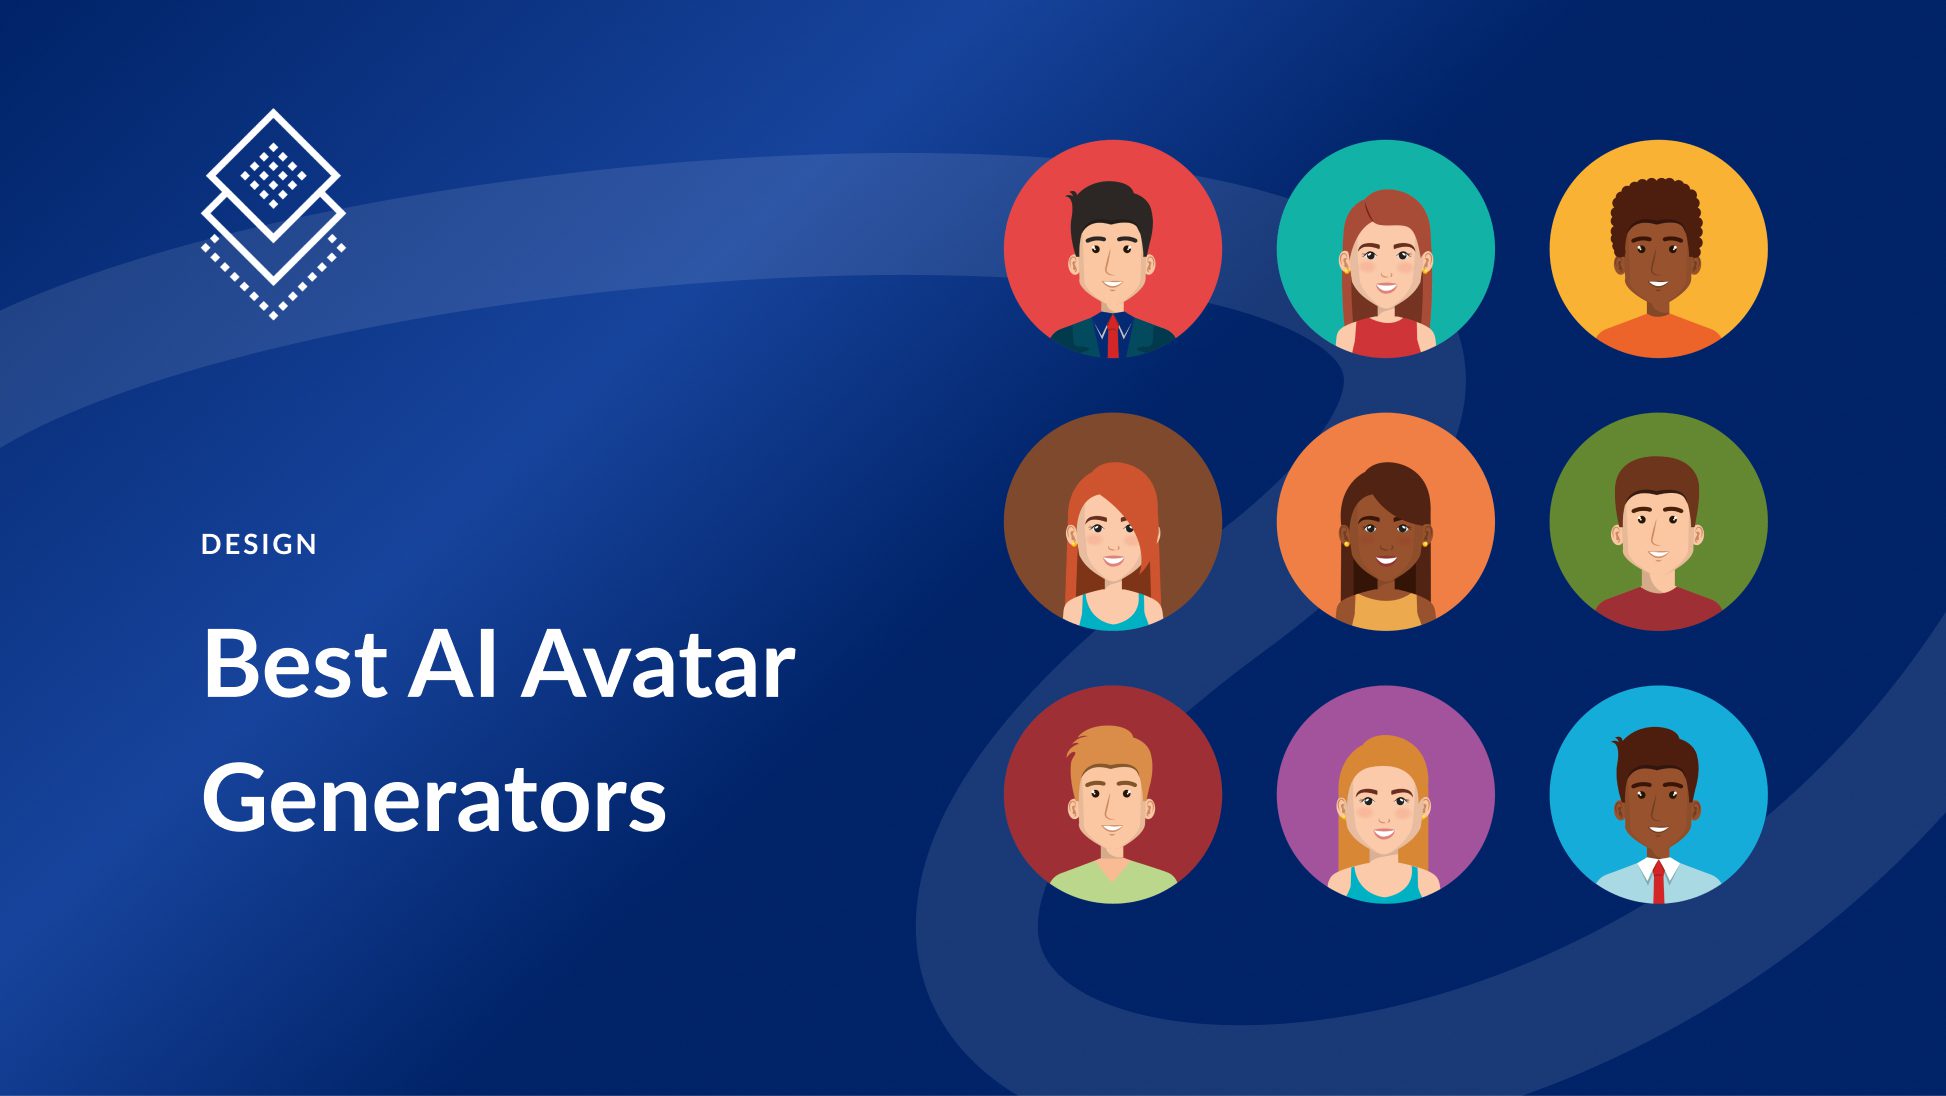 Free Avatar Maker: Create Custom Avatar Online